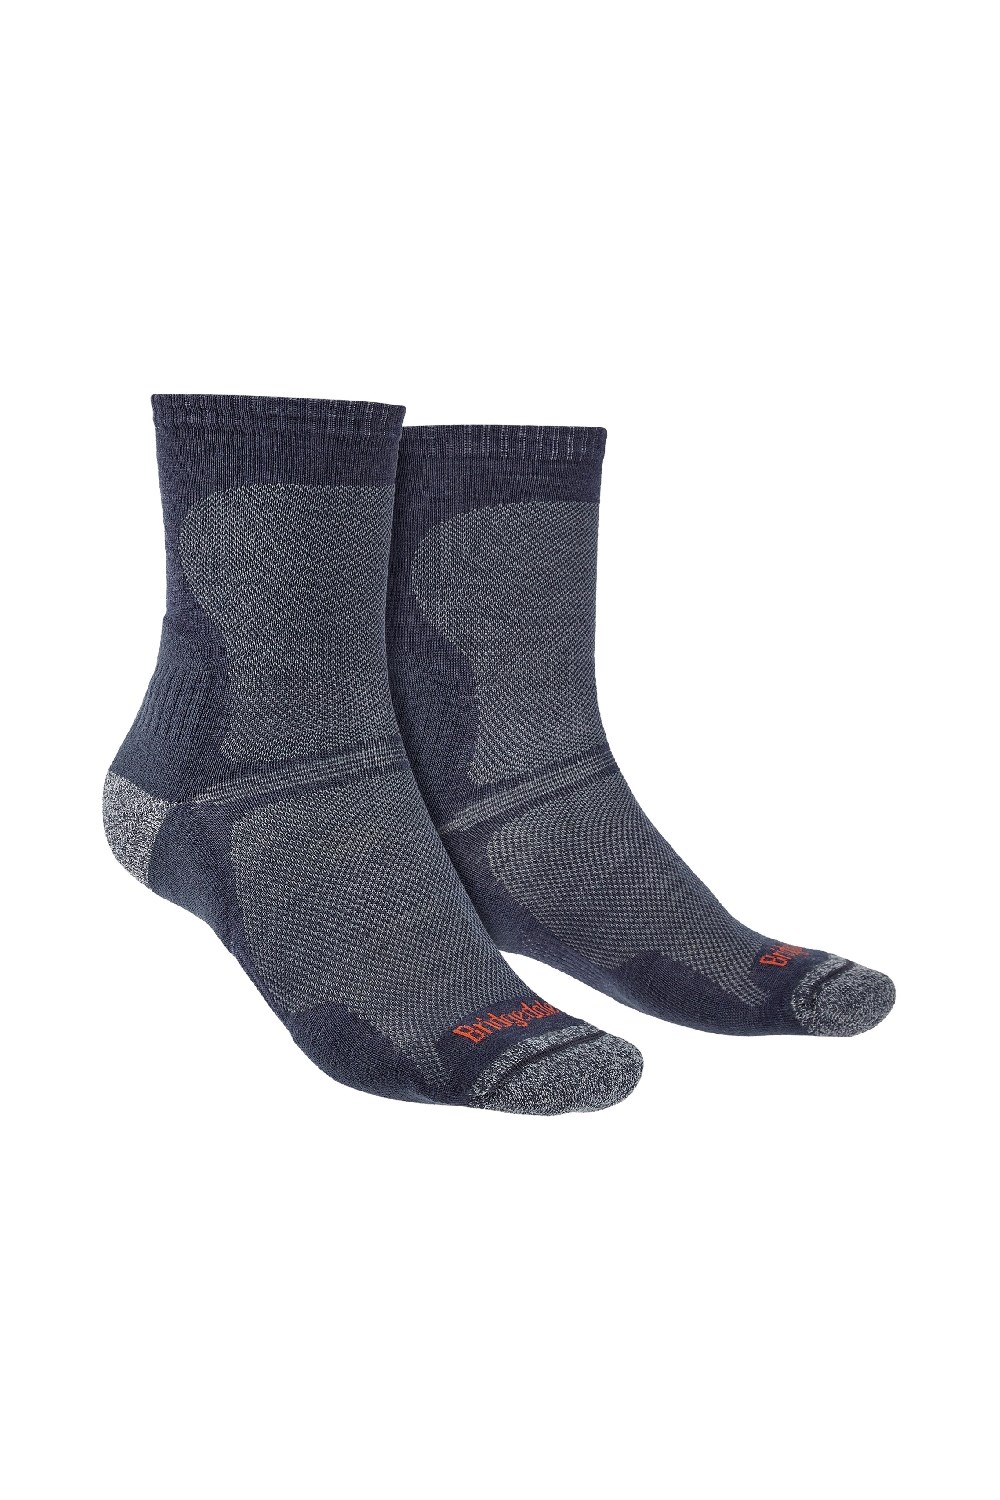 Mens Ultralight T2 Merino Hiking Socks -